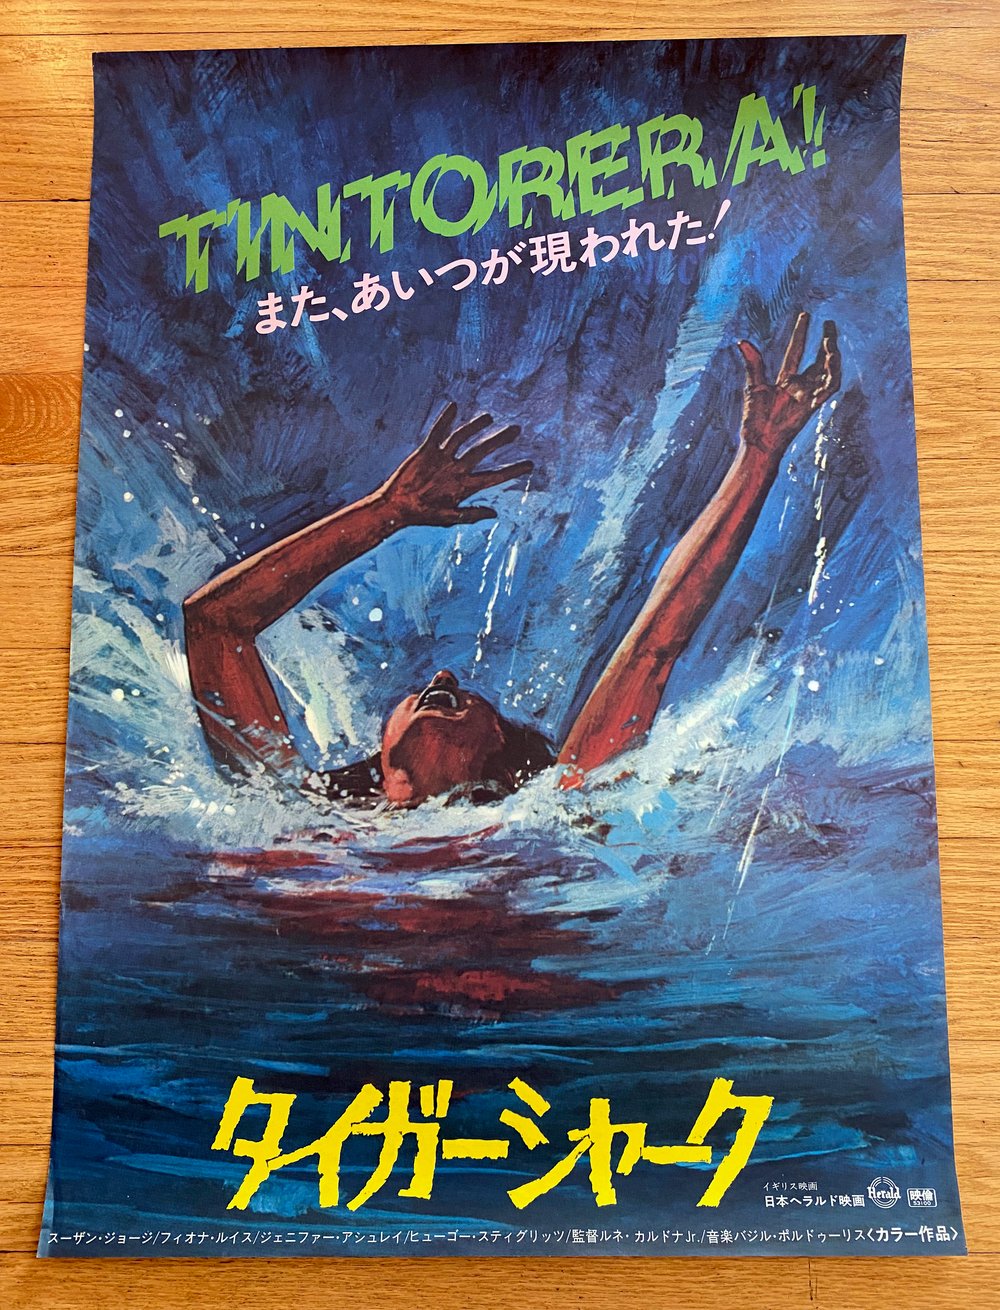 1978 TINTORERA TIGER SHARK Original Japanese B2 Movie Poster